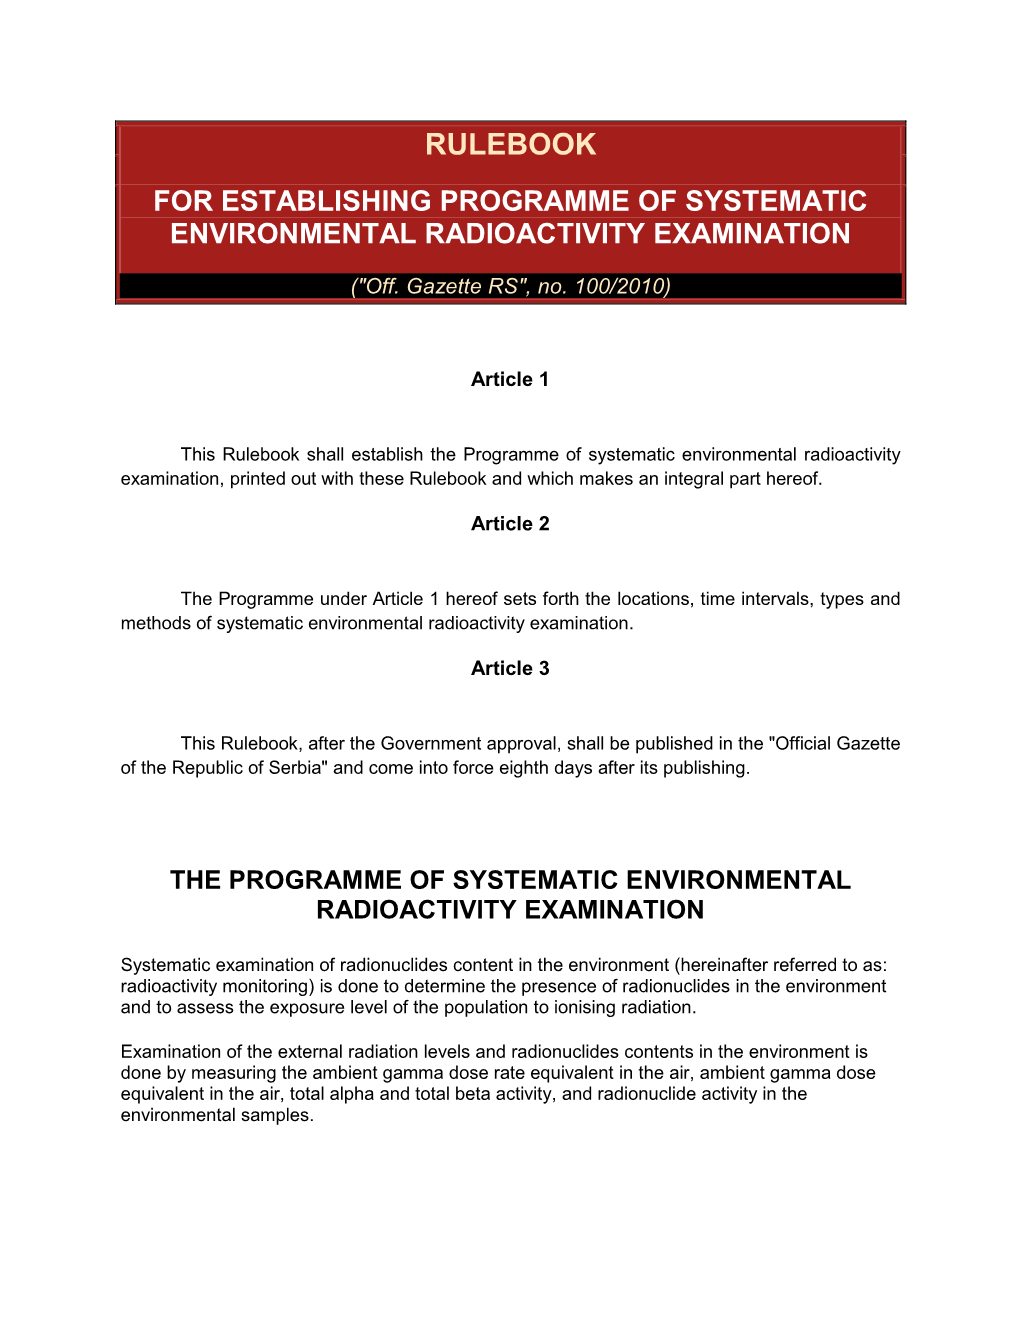 Rulebook for Establishing Programme of Systematic Environmental Radioactivity Examination